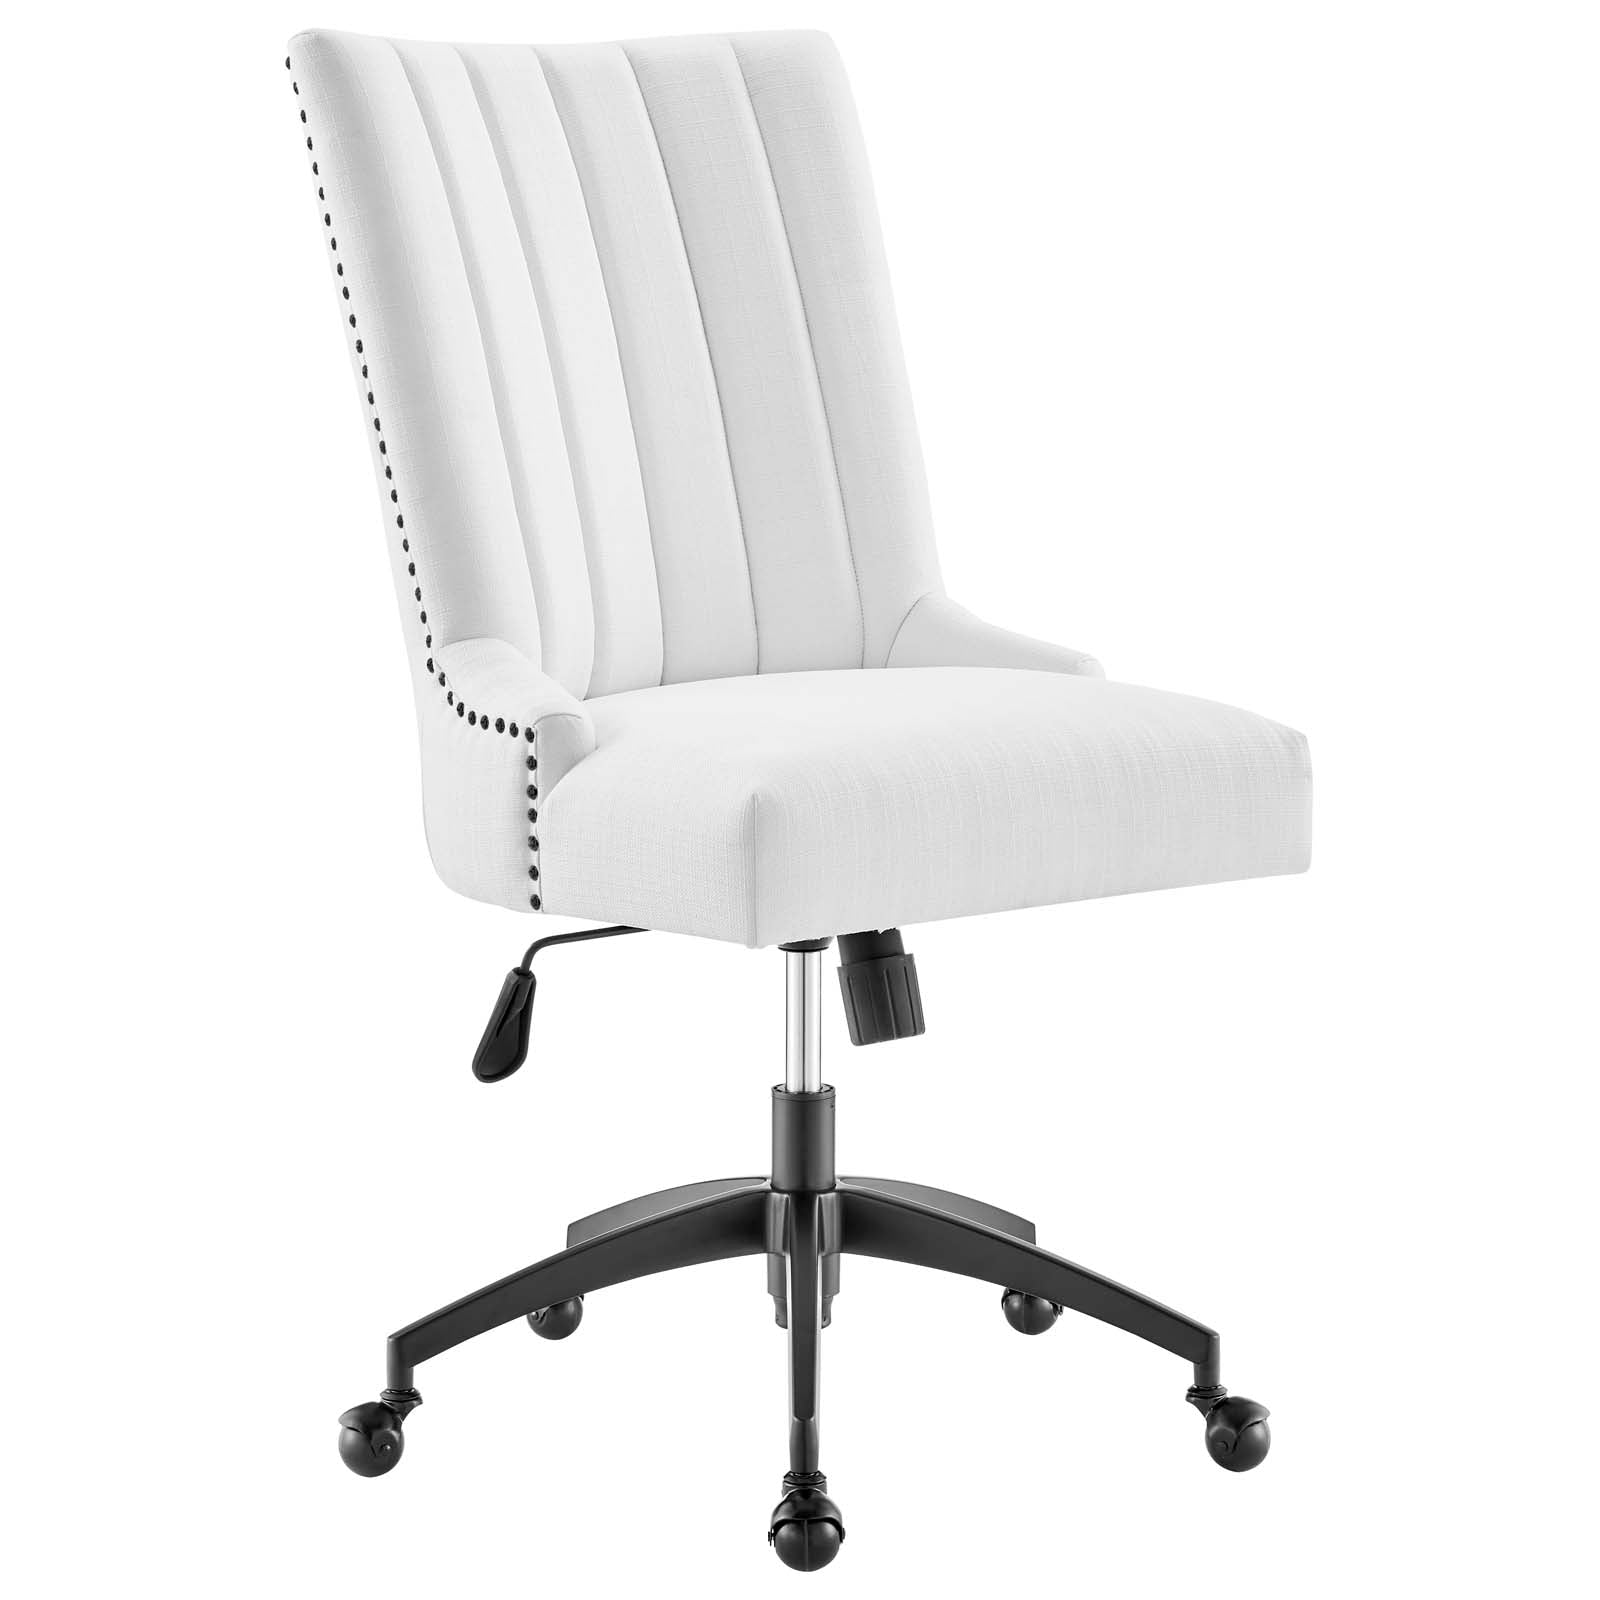 Baldwin Tufted Fabric Office Chair